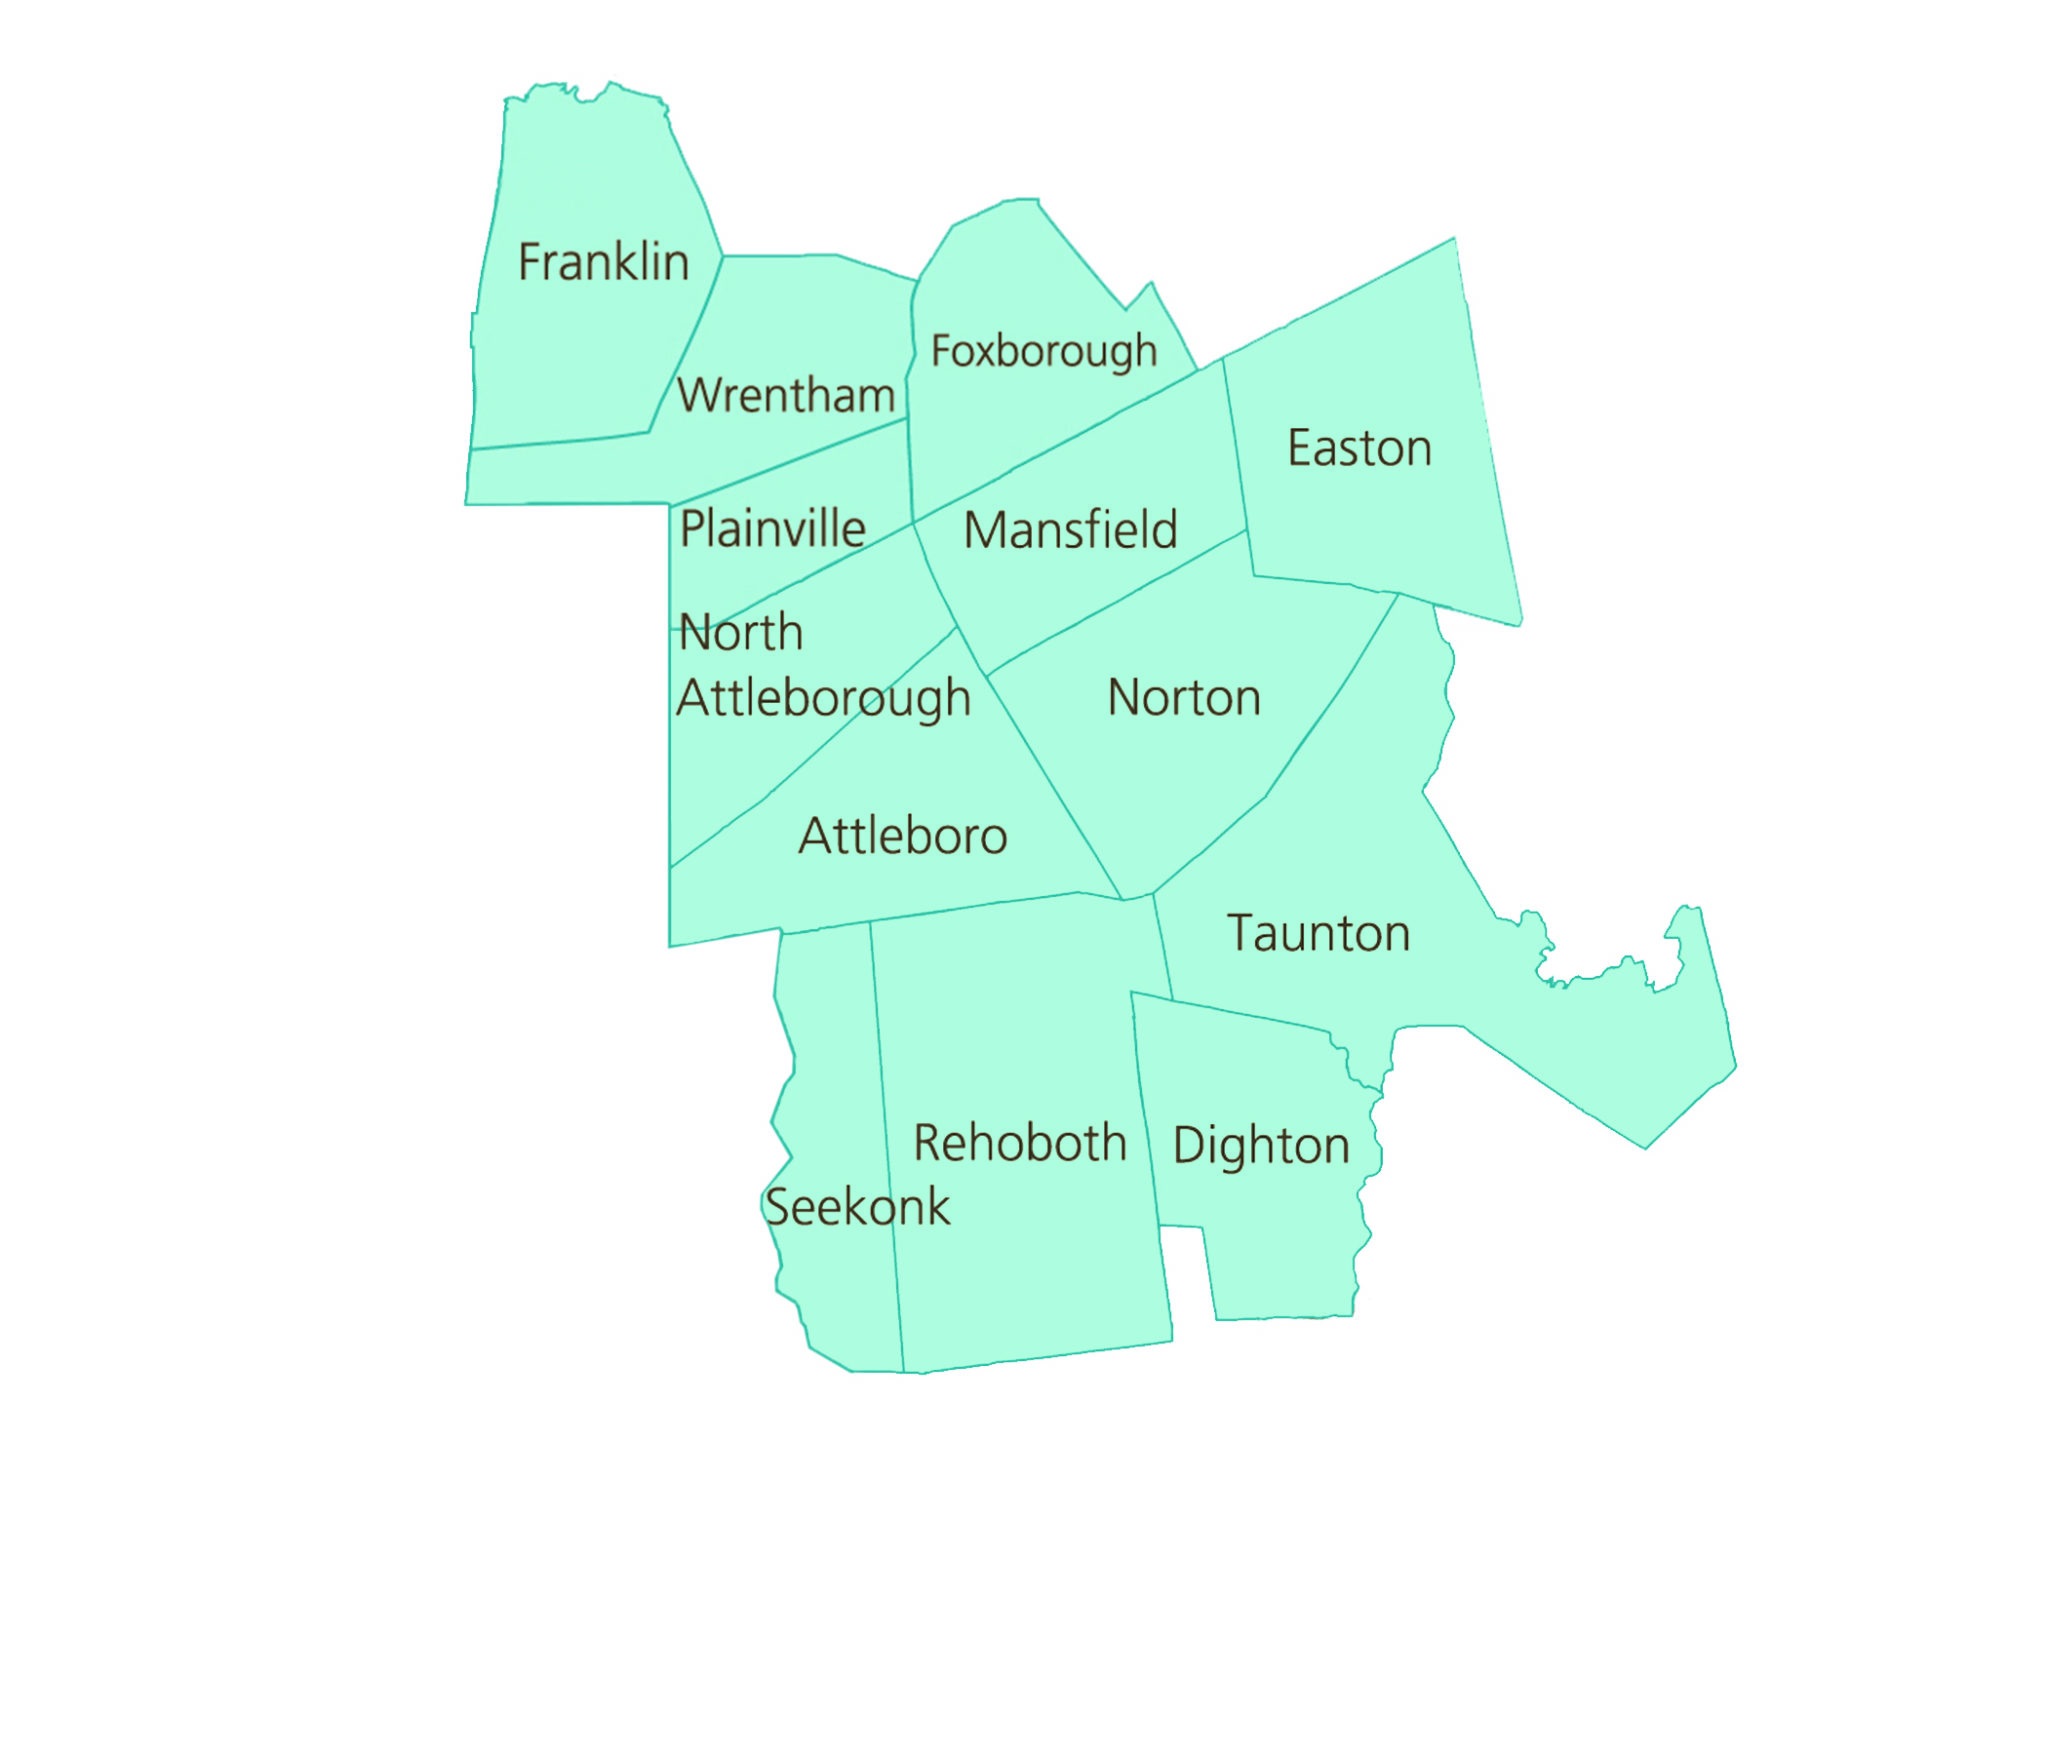 Service area map for southeastern Massachusetts Alzheimer's Disease Assistance Program